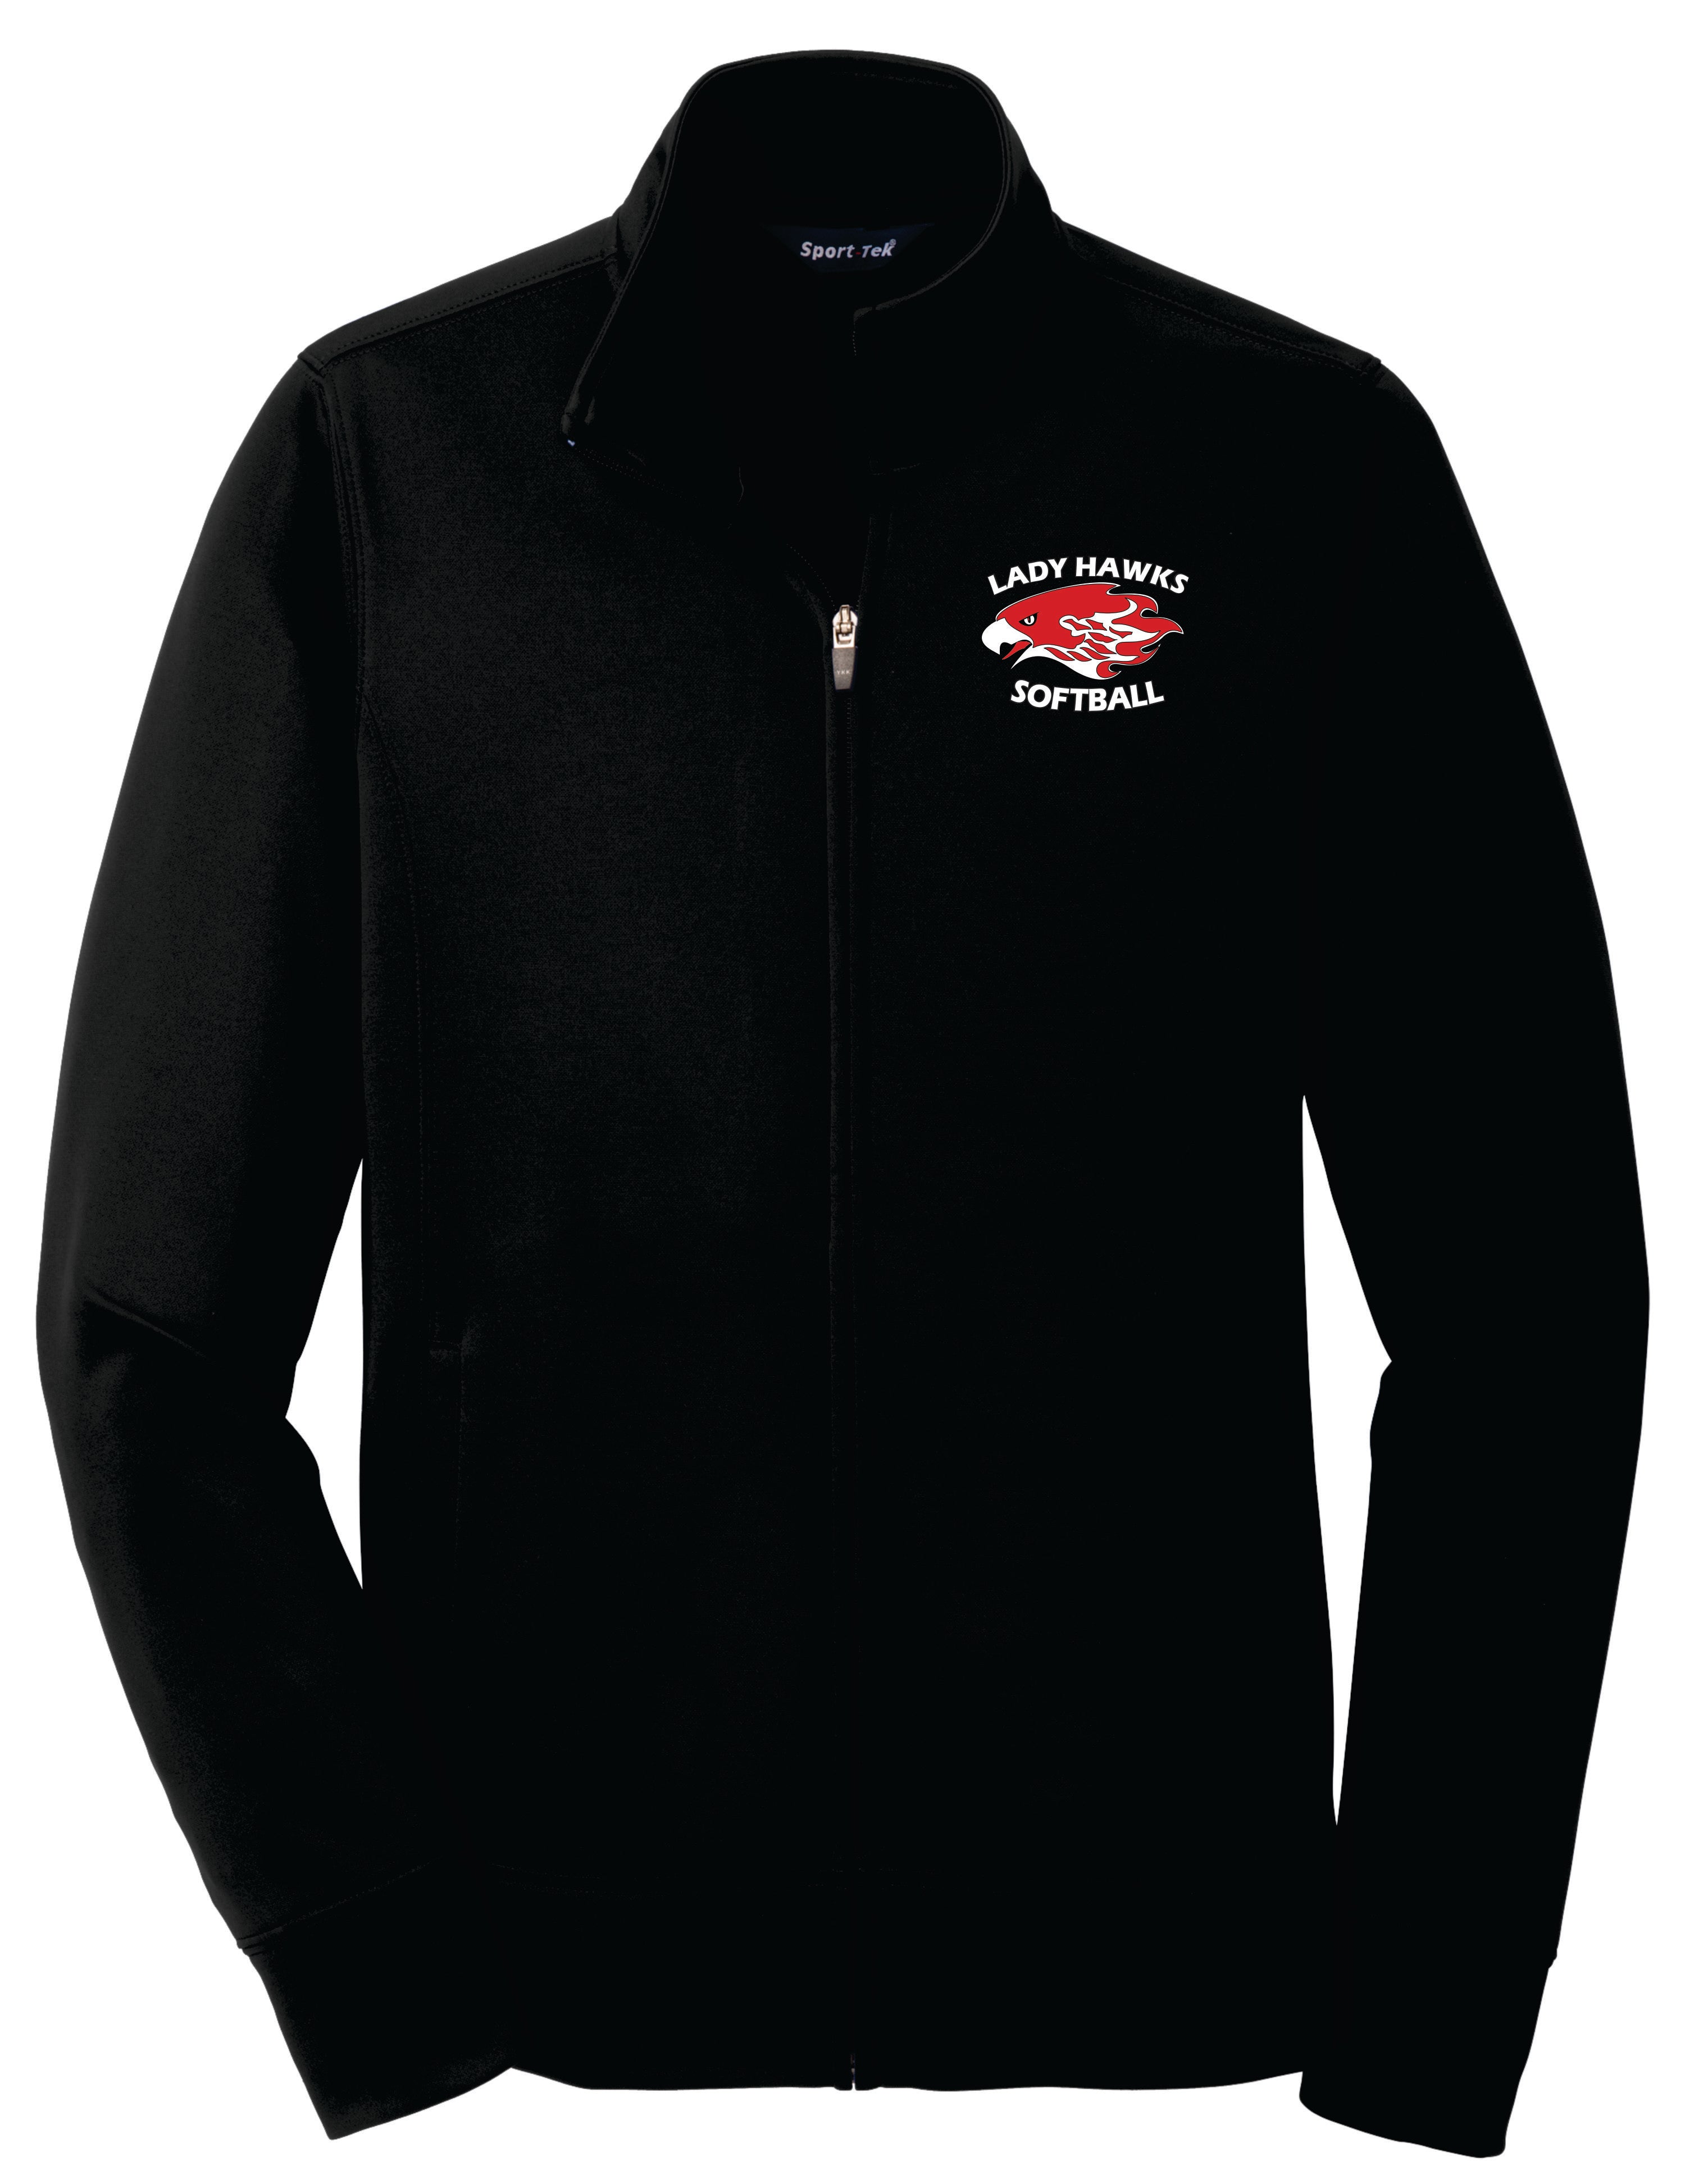 Rossview Hawks Softball Fleece Jacket